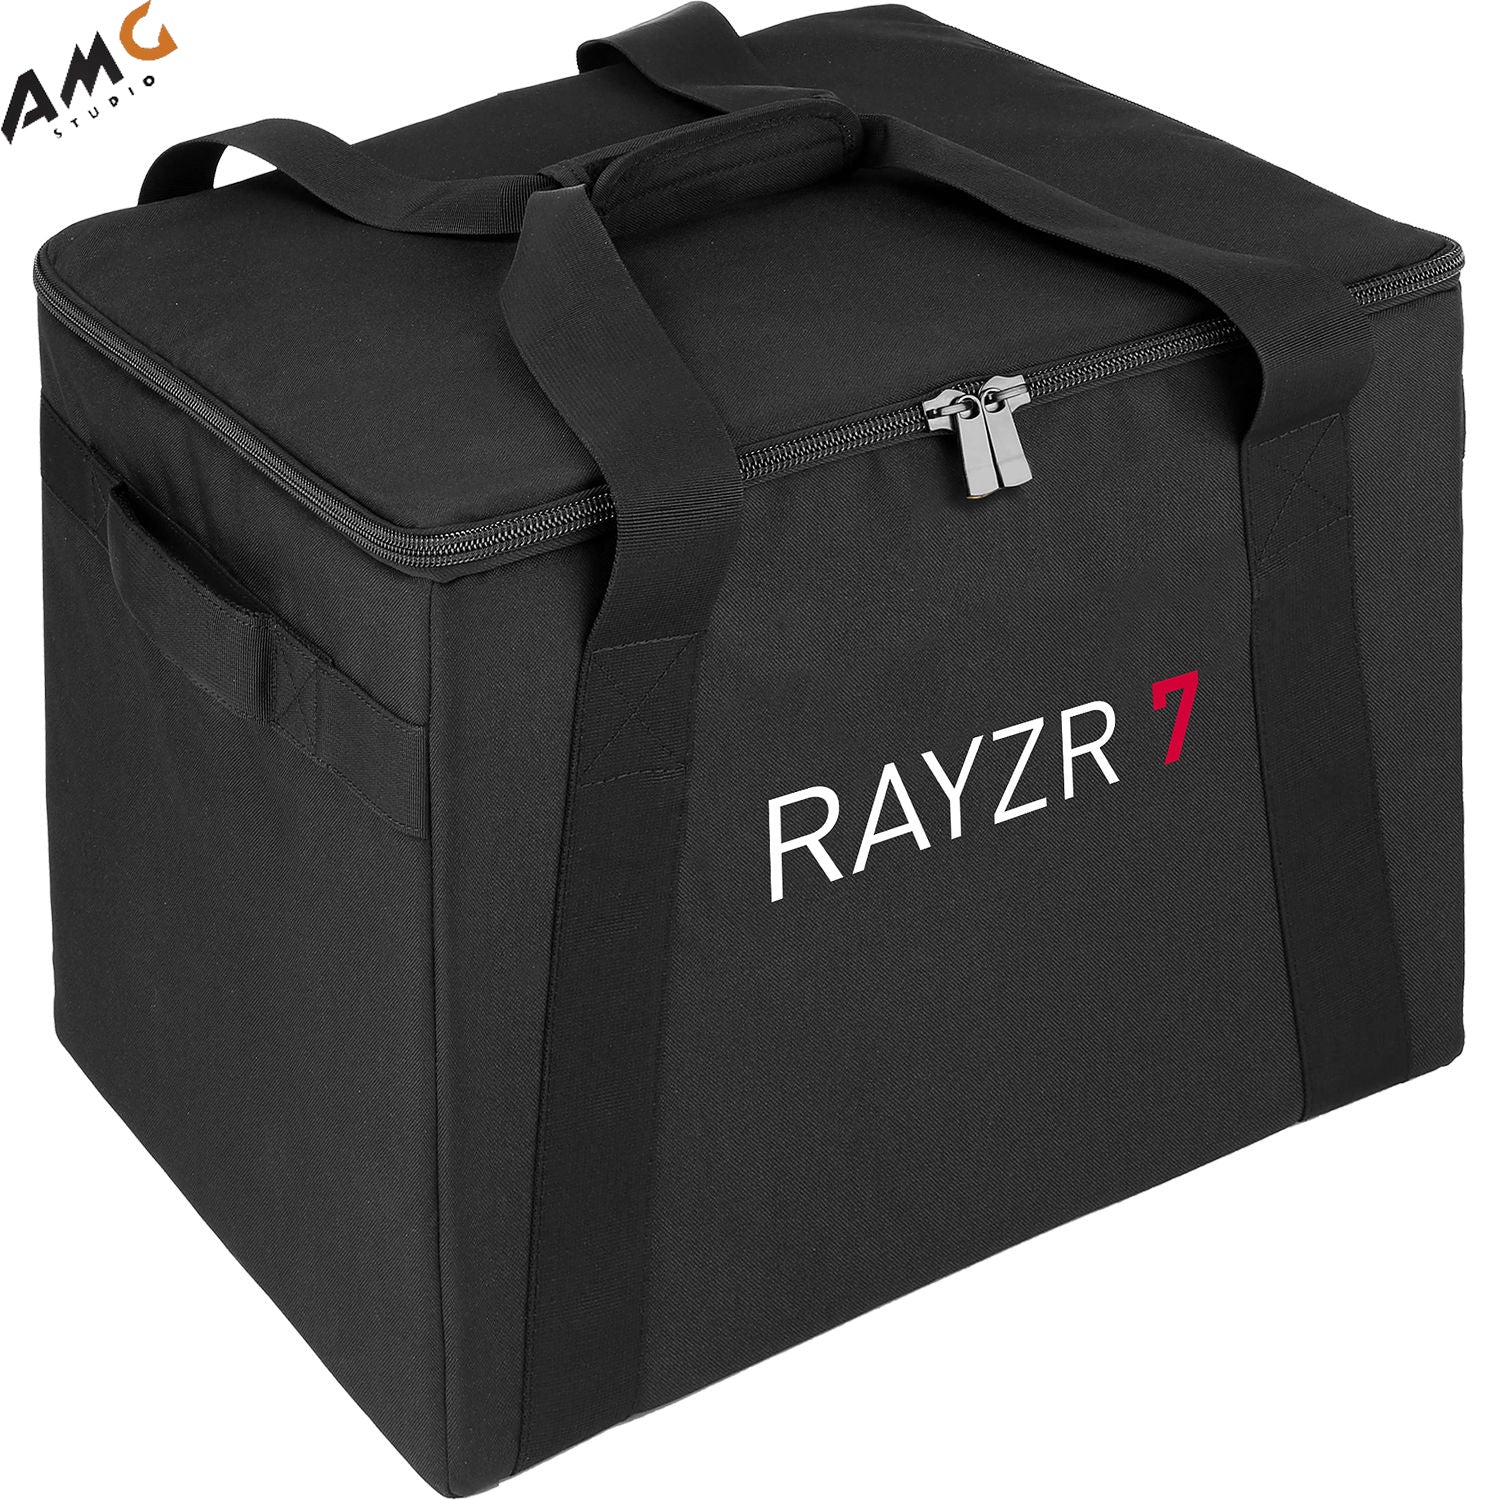 Rayzr 7 7